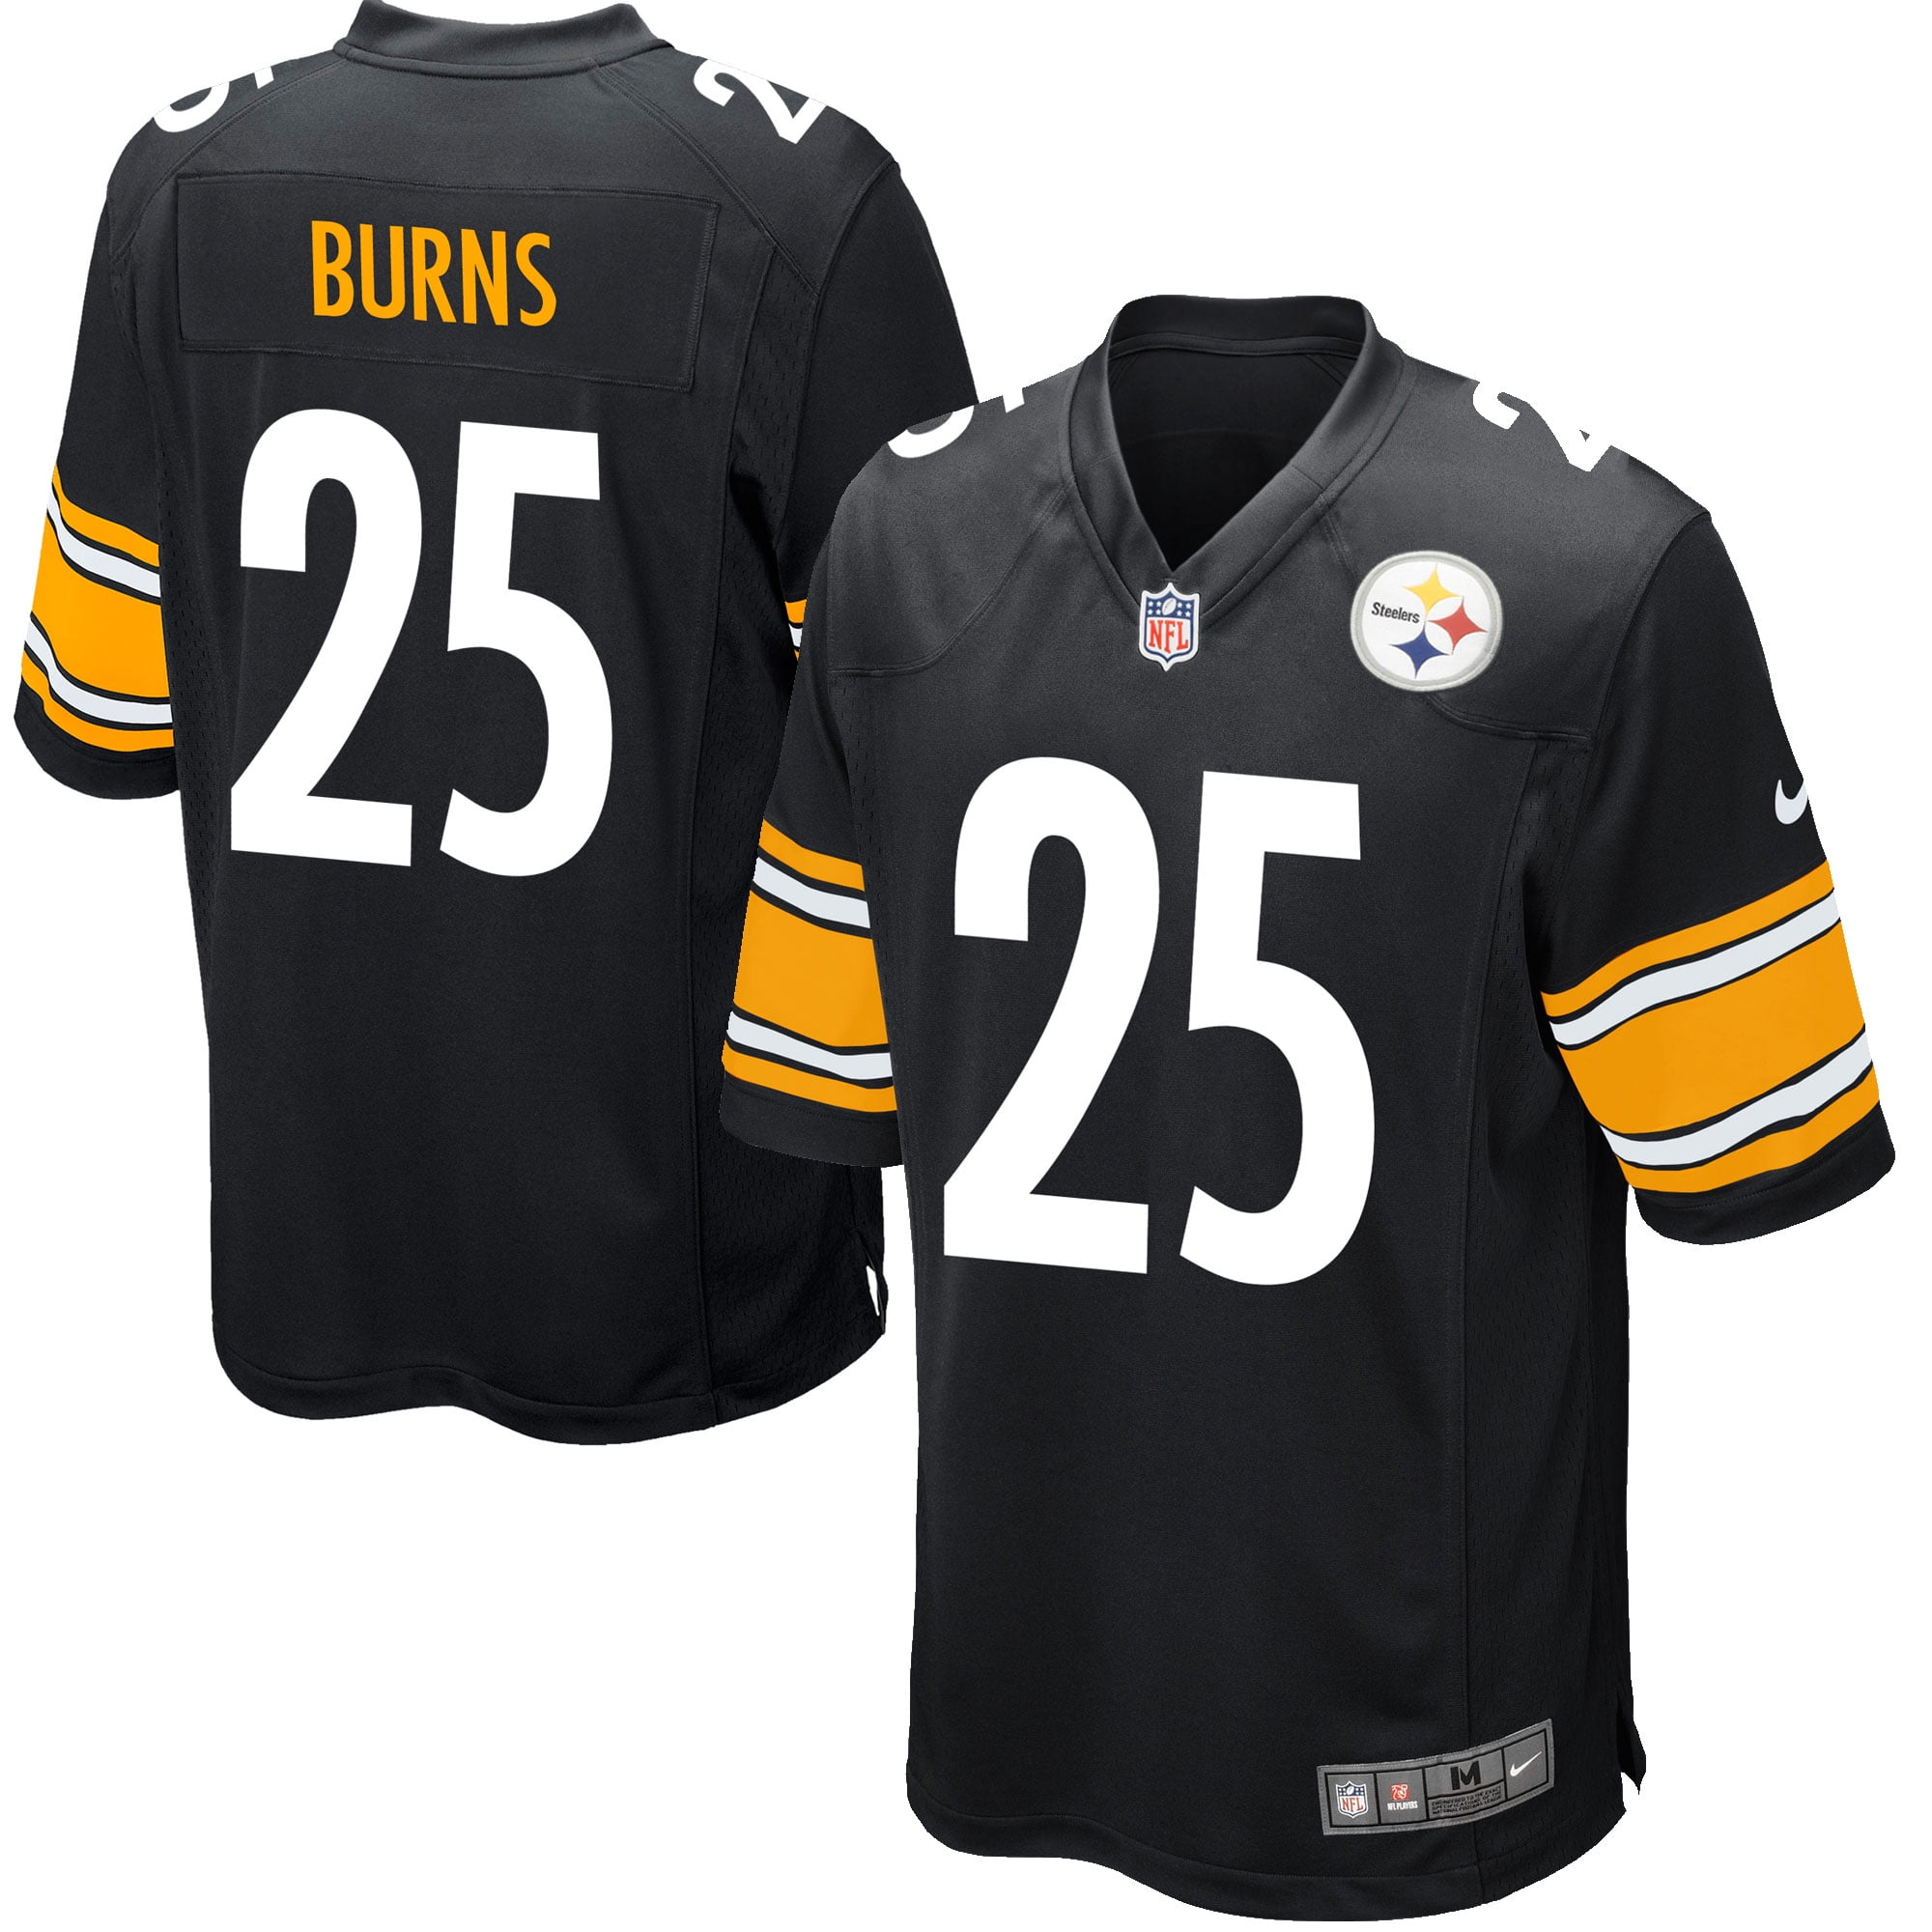 Artie Burns Pittsburgh Steelers Nike Game Jersey - Black - Walmart.com